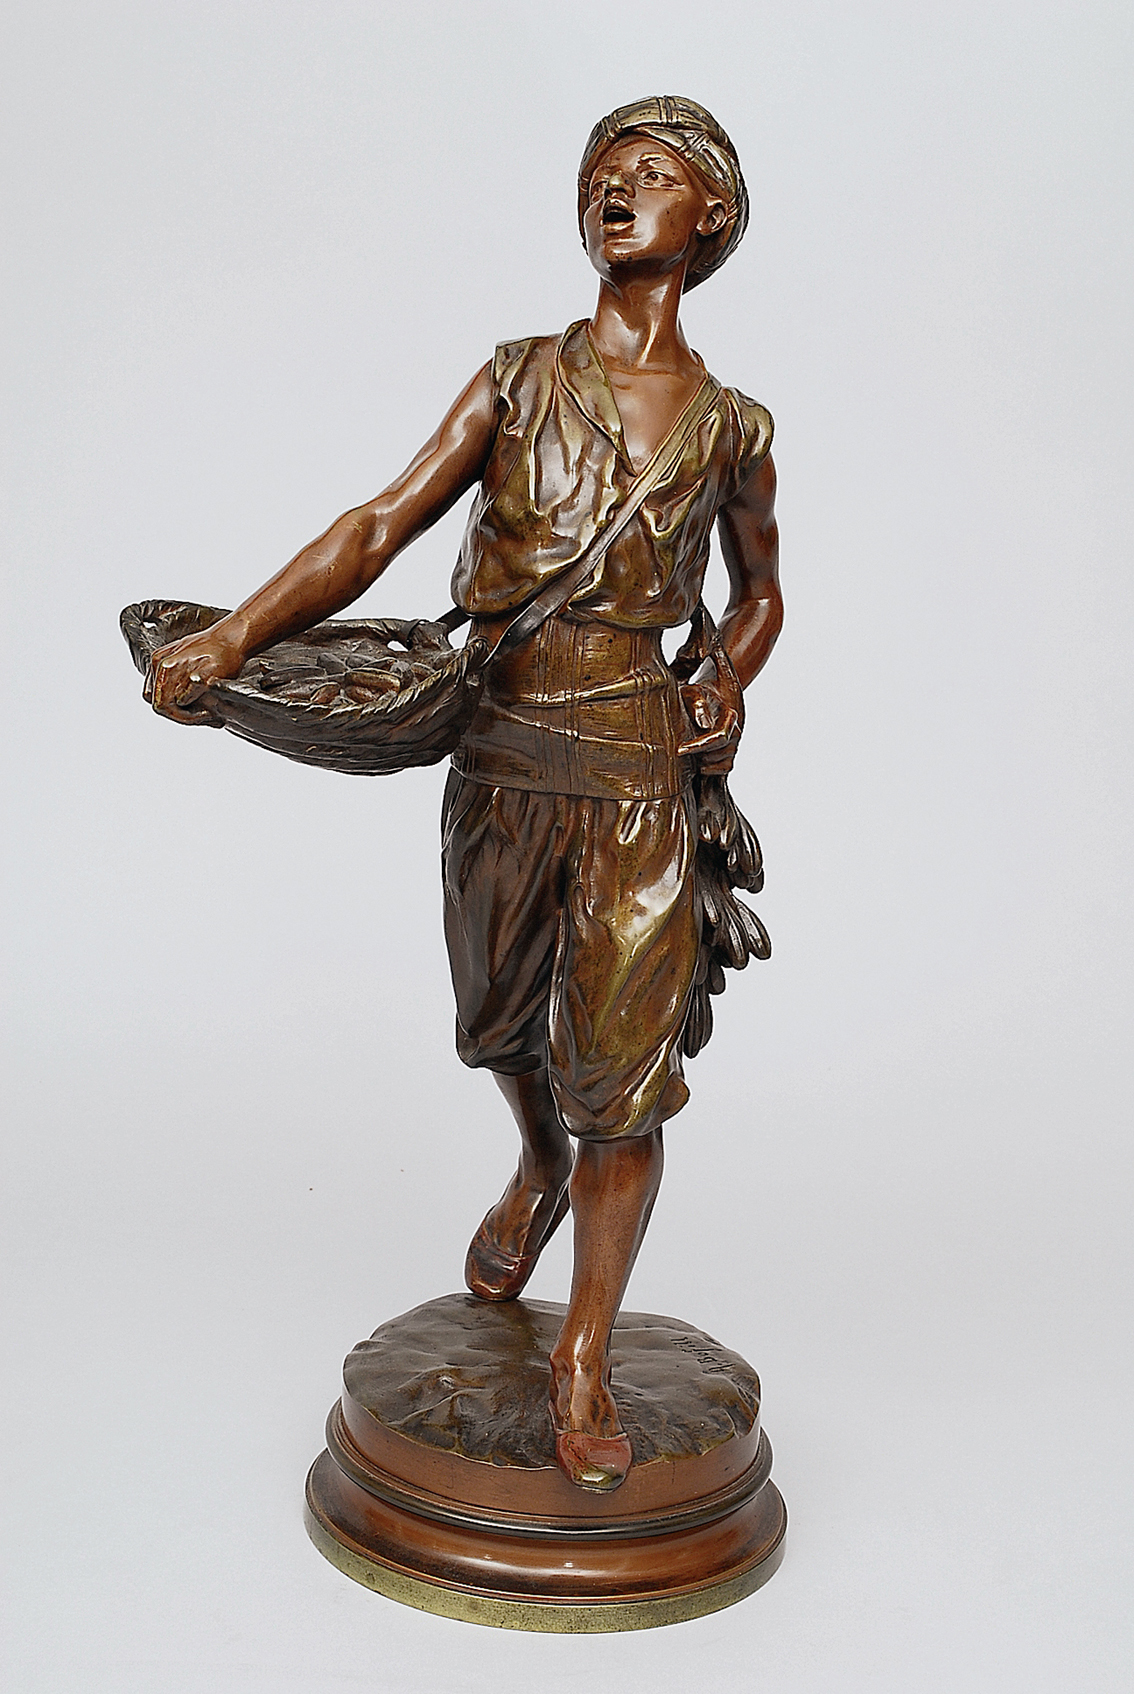 An expressive bronze figure 'The Arabic date seller'